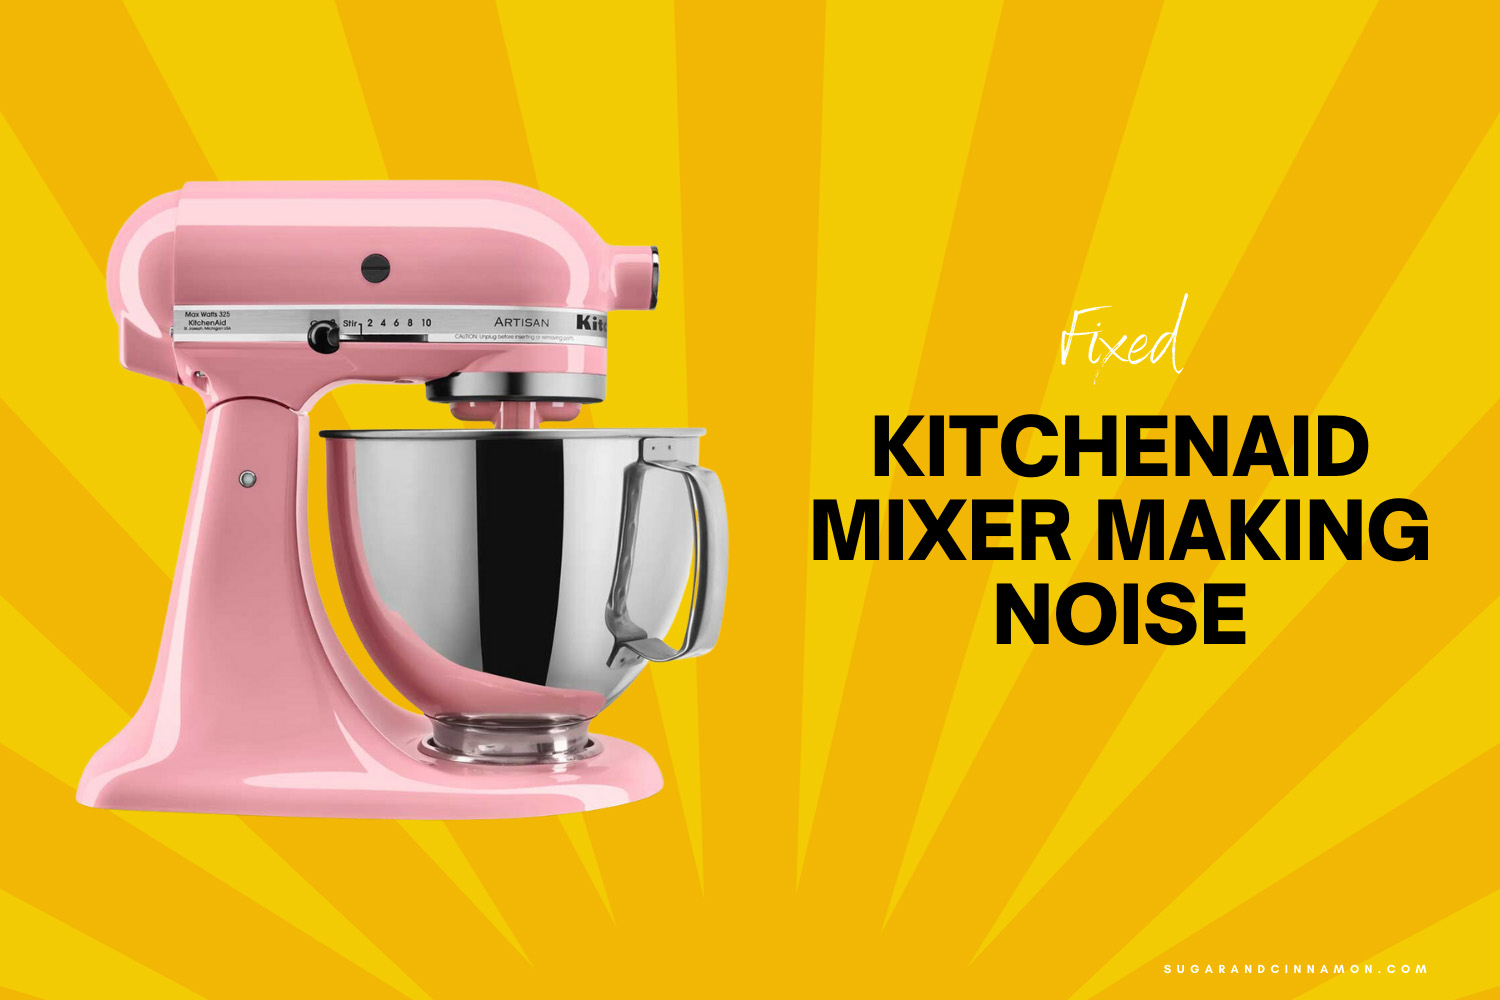 KitchenAid Mixer Making Noise